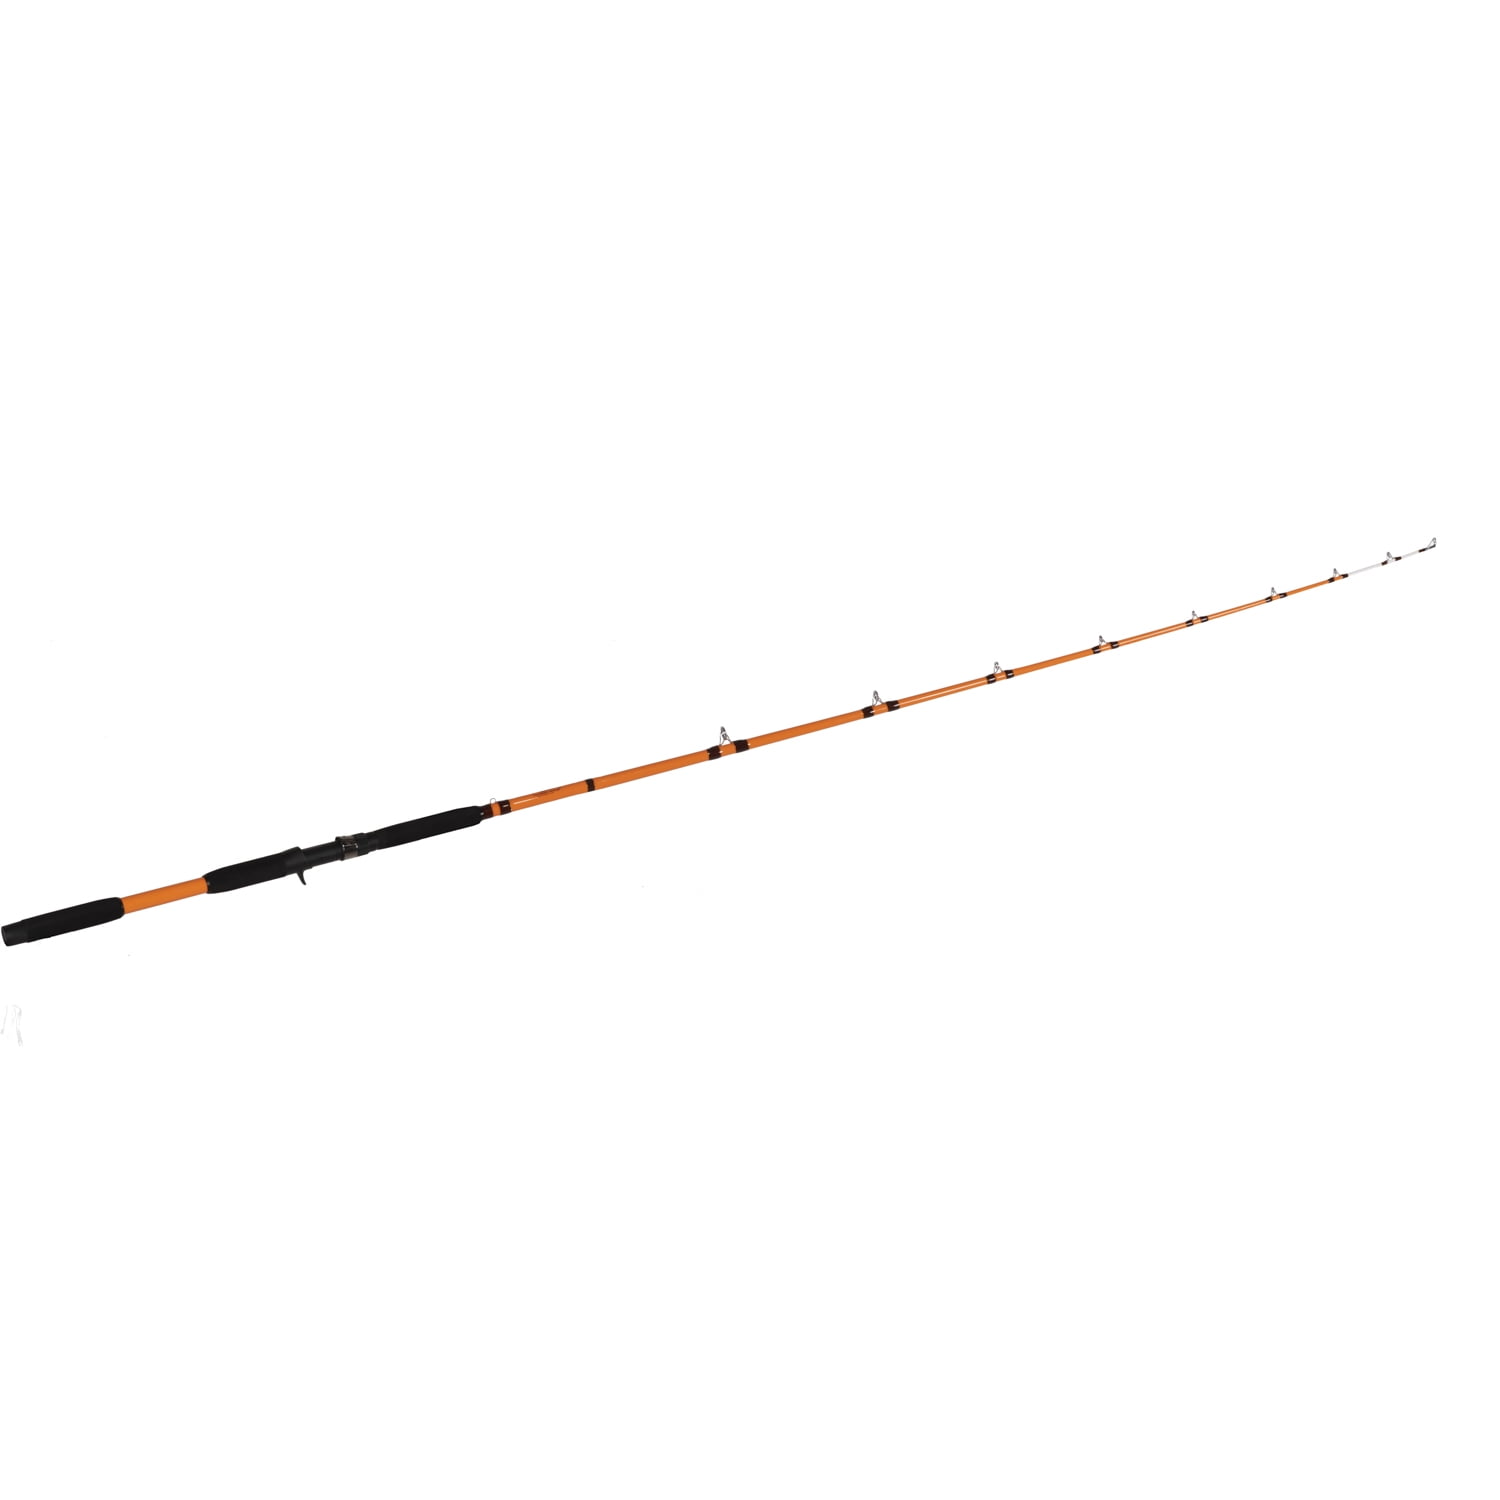 Catfish Pro Tournament Series Casting Fishing Rod 7'6 Medium